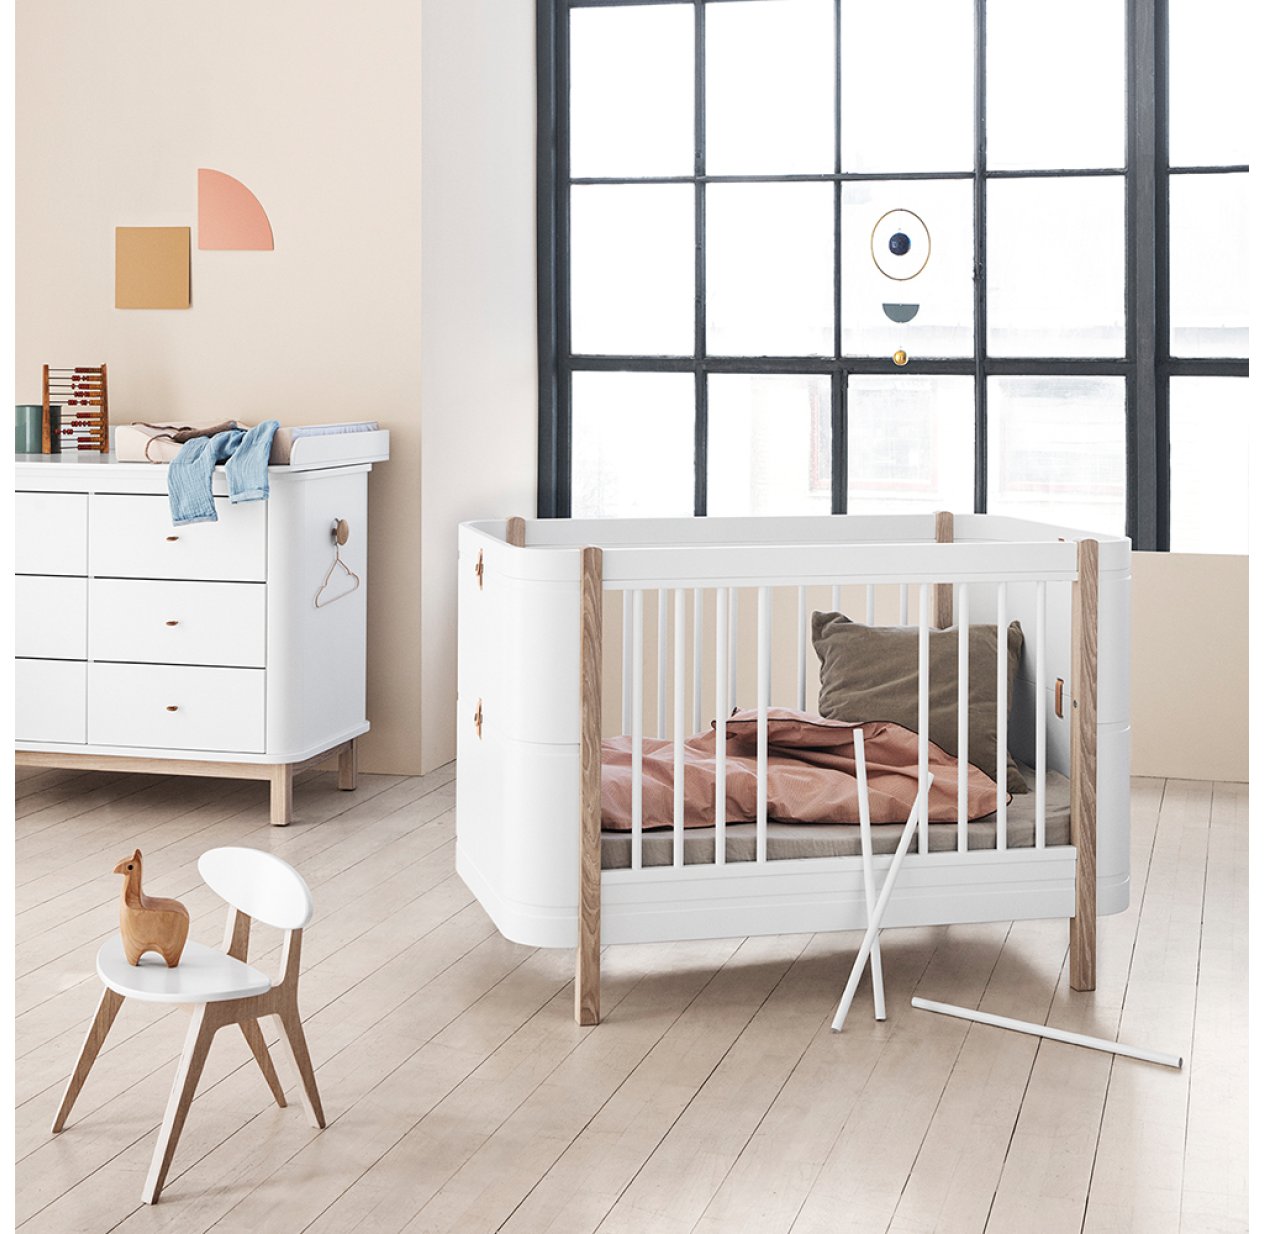 Matelas lit bébé Wood 70x140cm Oliver Furniture Blanc